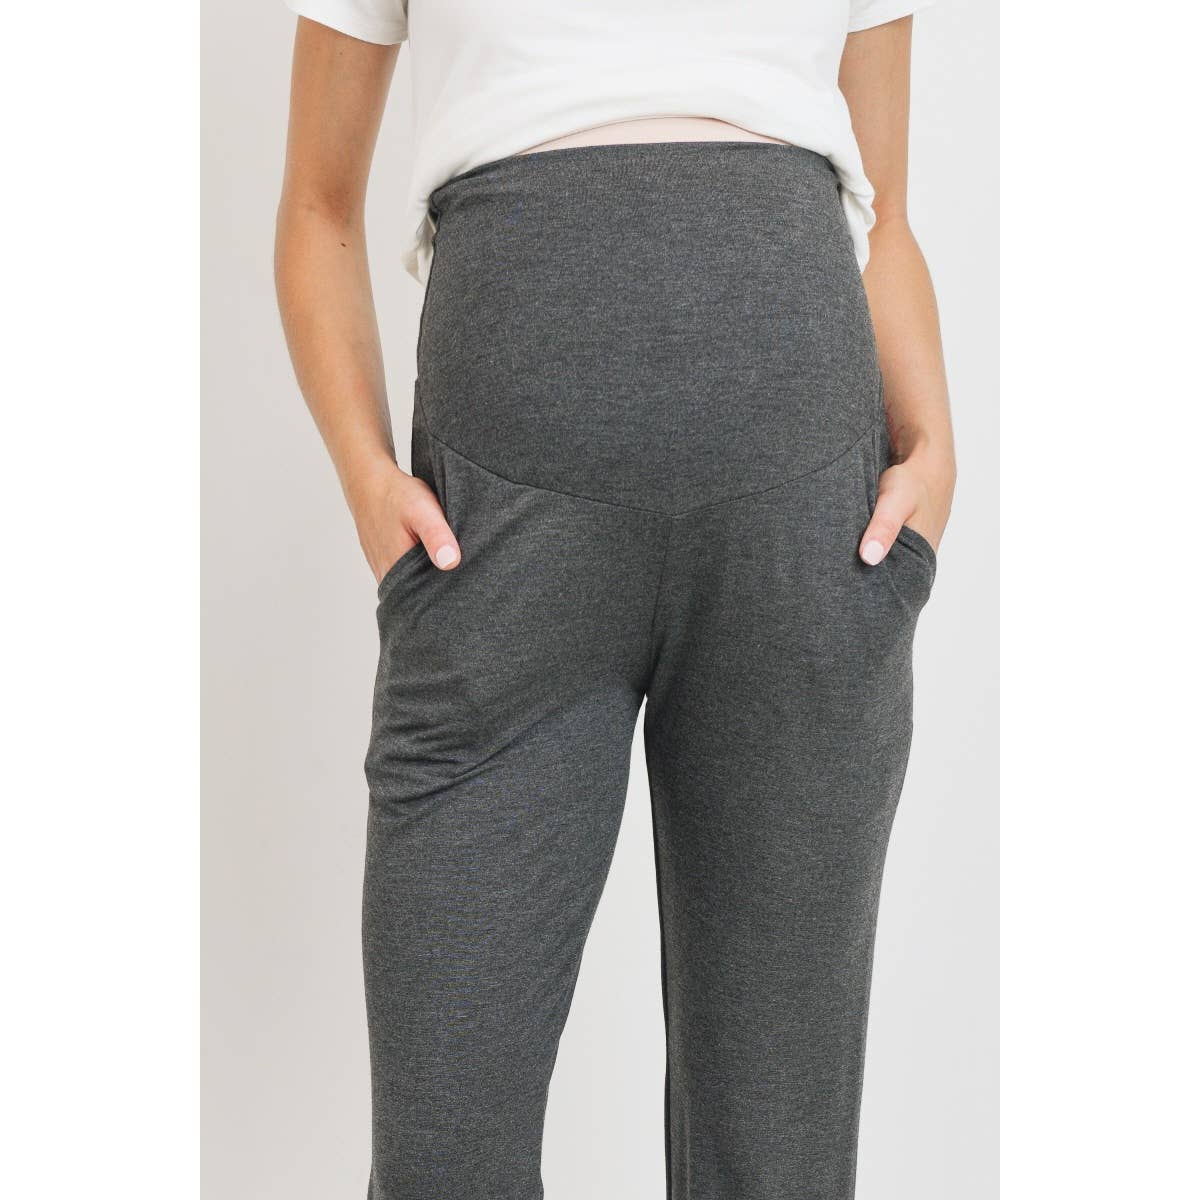 Rayon Modal Maternity Jogger Pant with Pockets: Charcoal / M